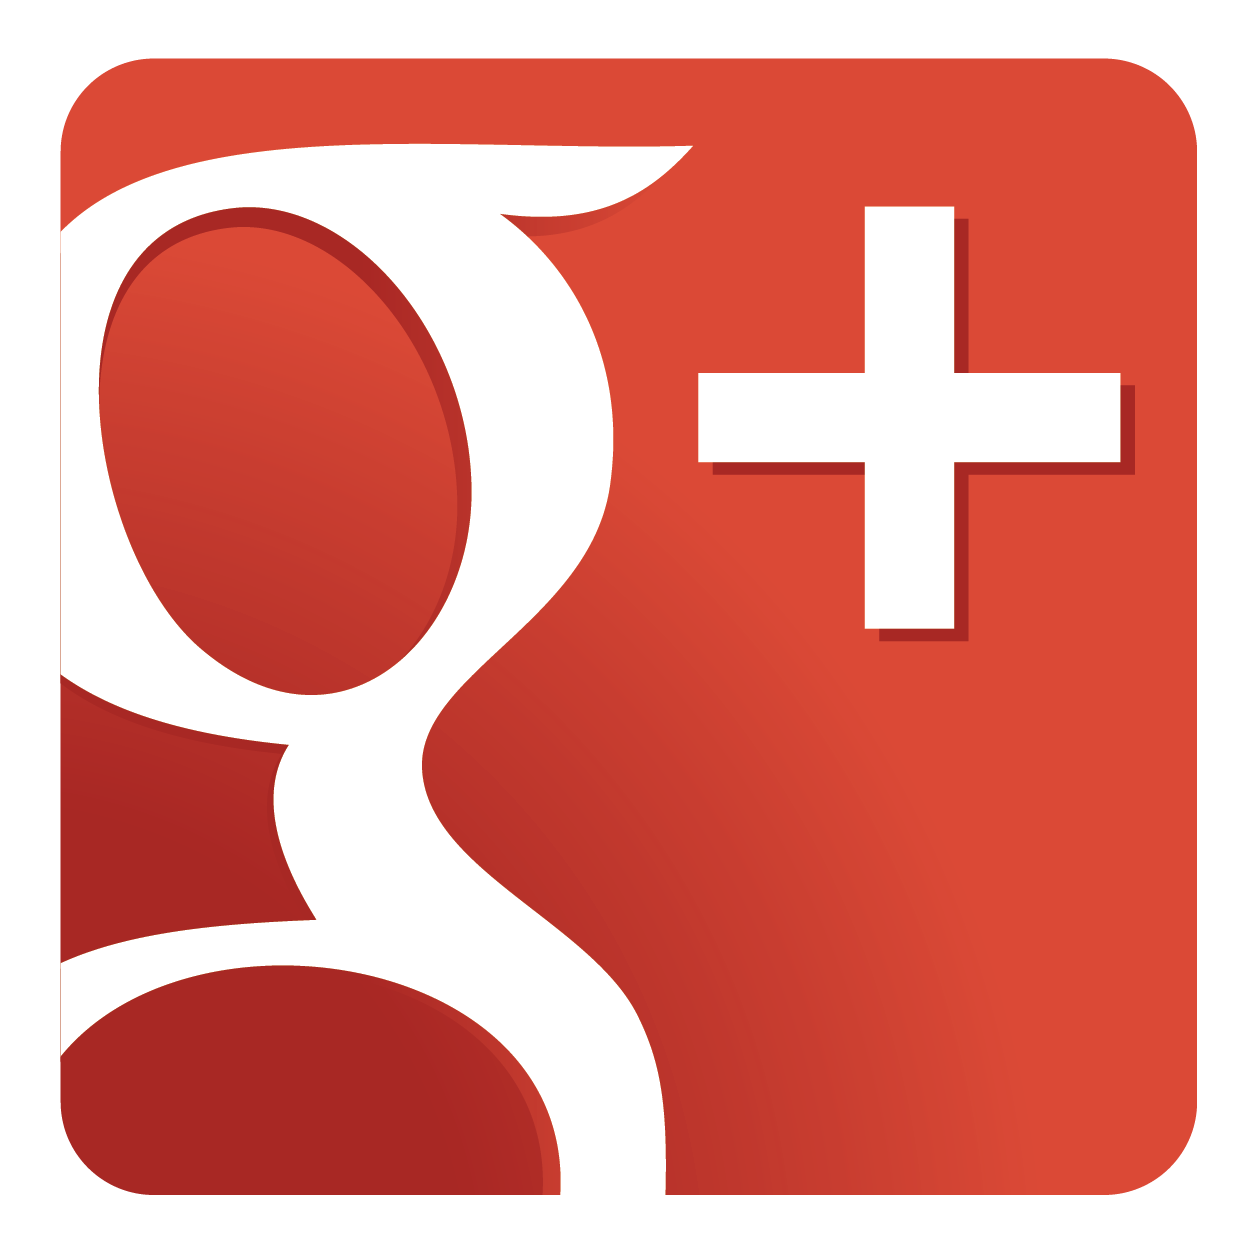 Google Media High Google+ Plus Social Images PNG Image